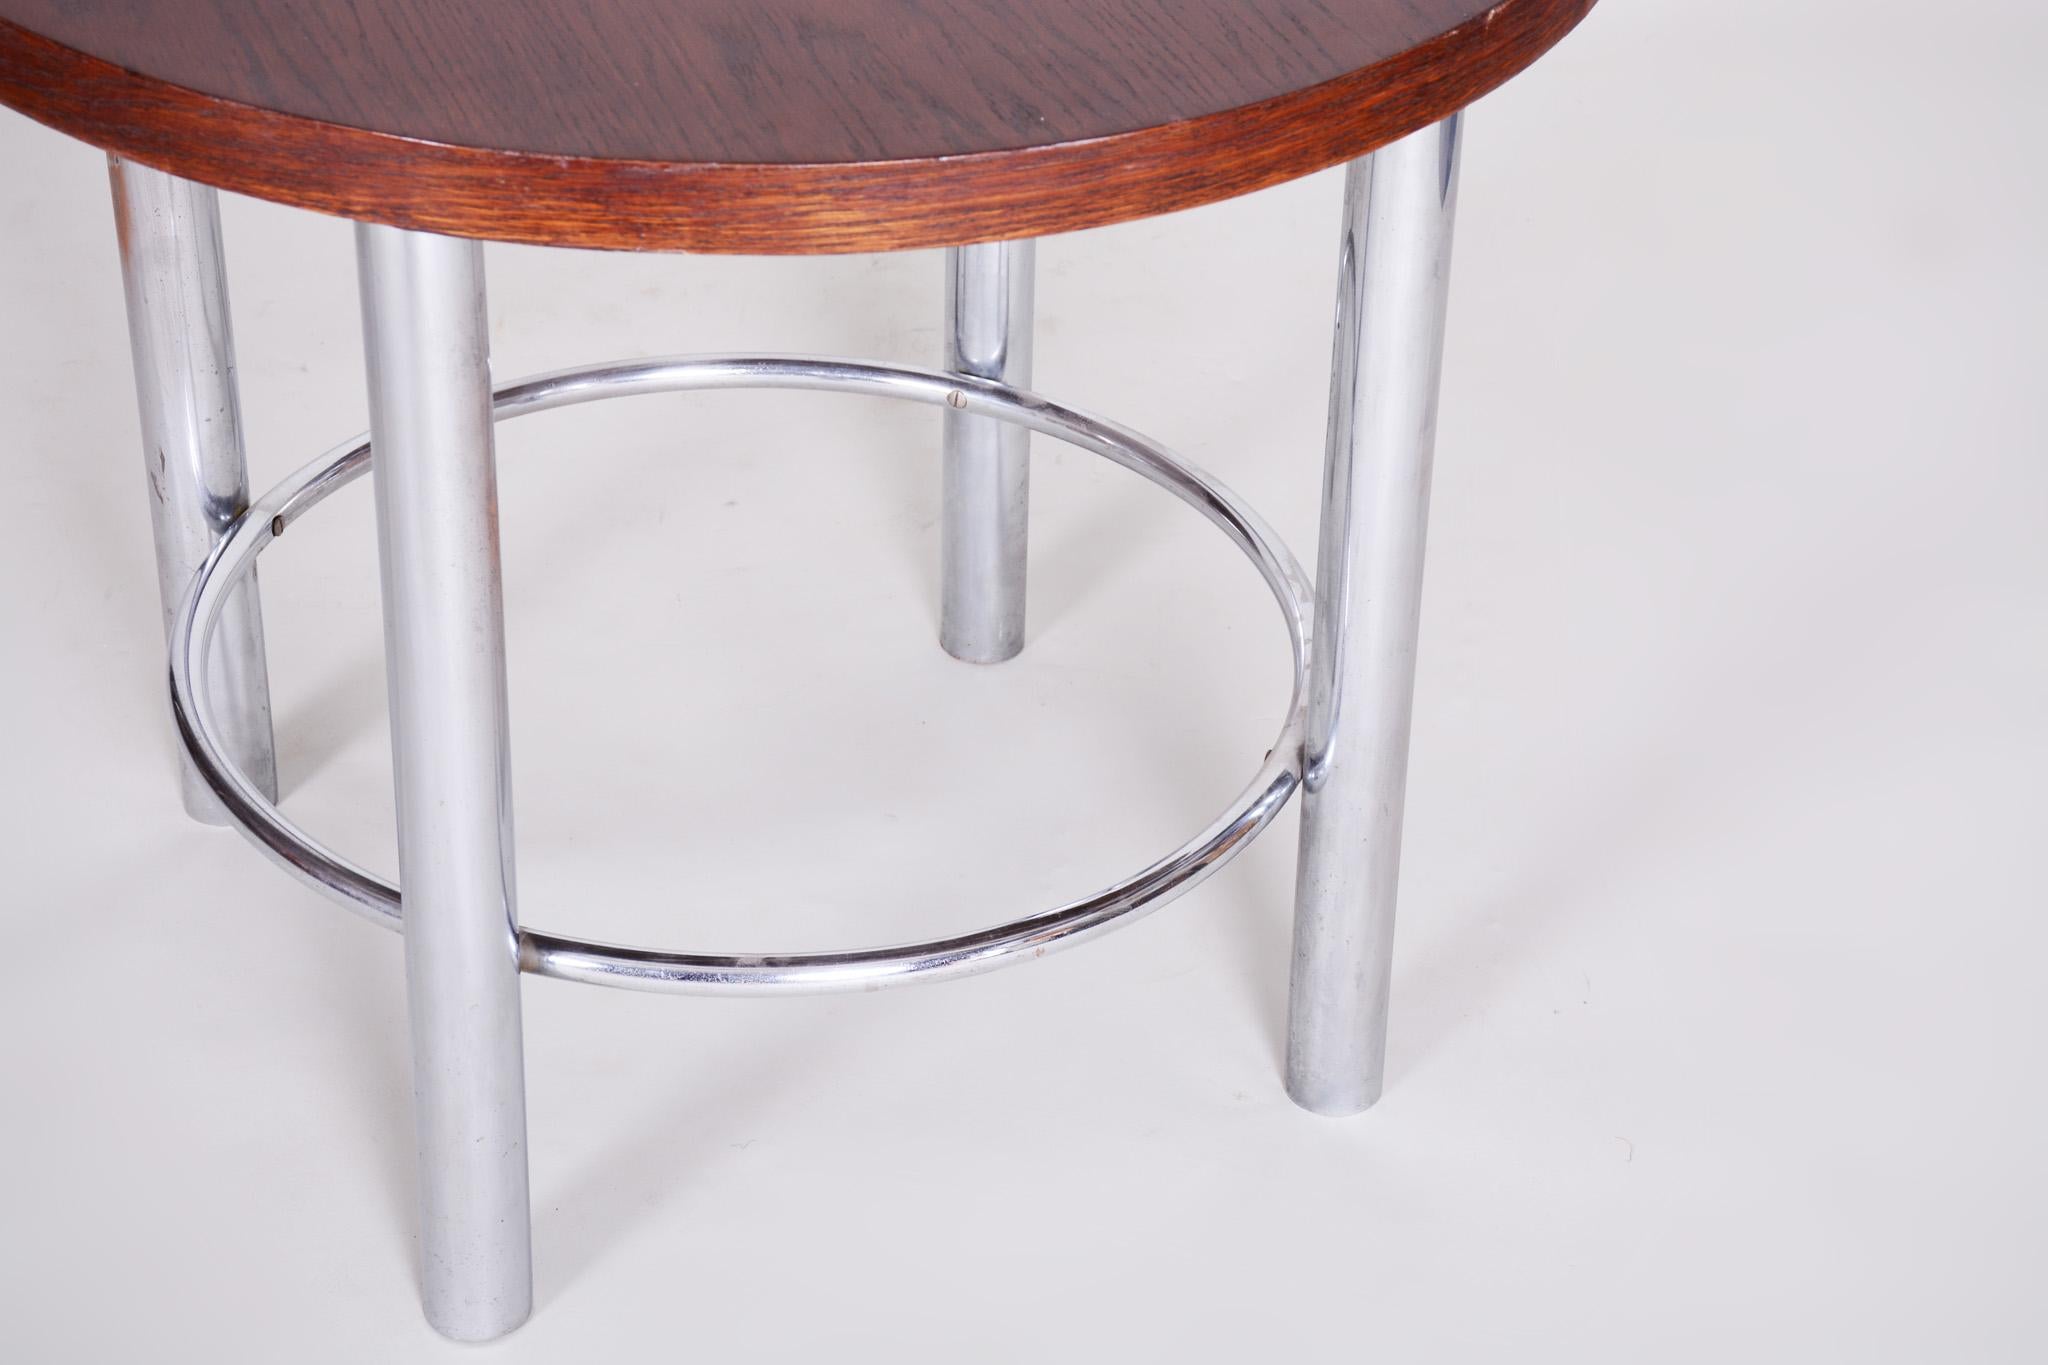 Restored Czech Round Oak Bauhaus Table by Mücke & Melder, Chrome, 1930s For Sale 1